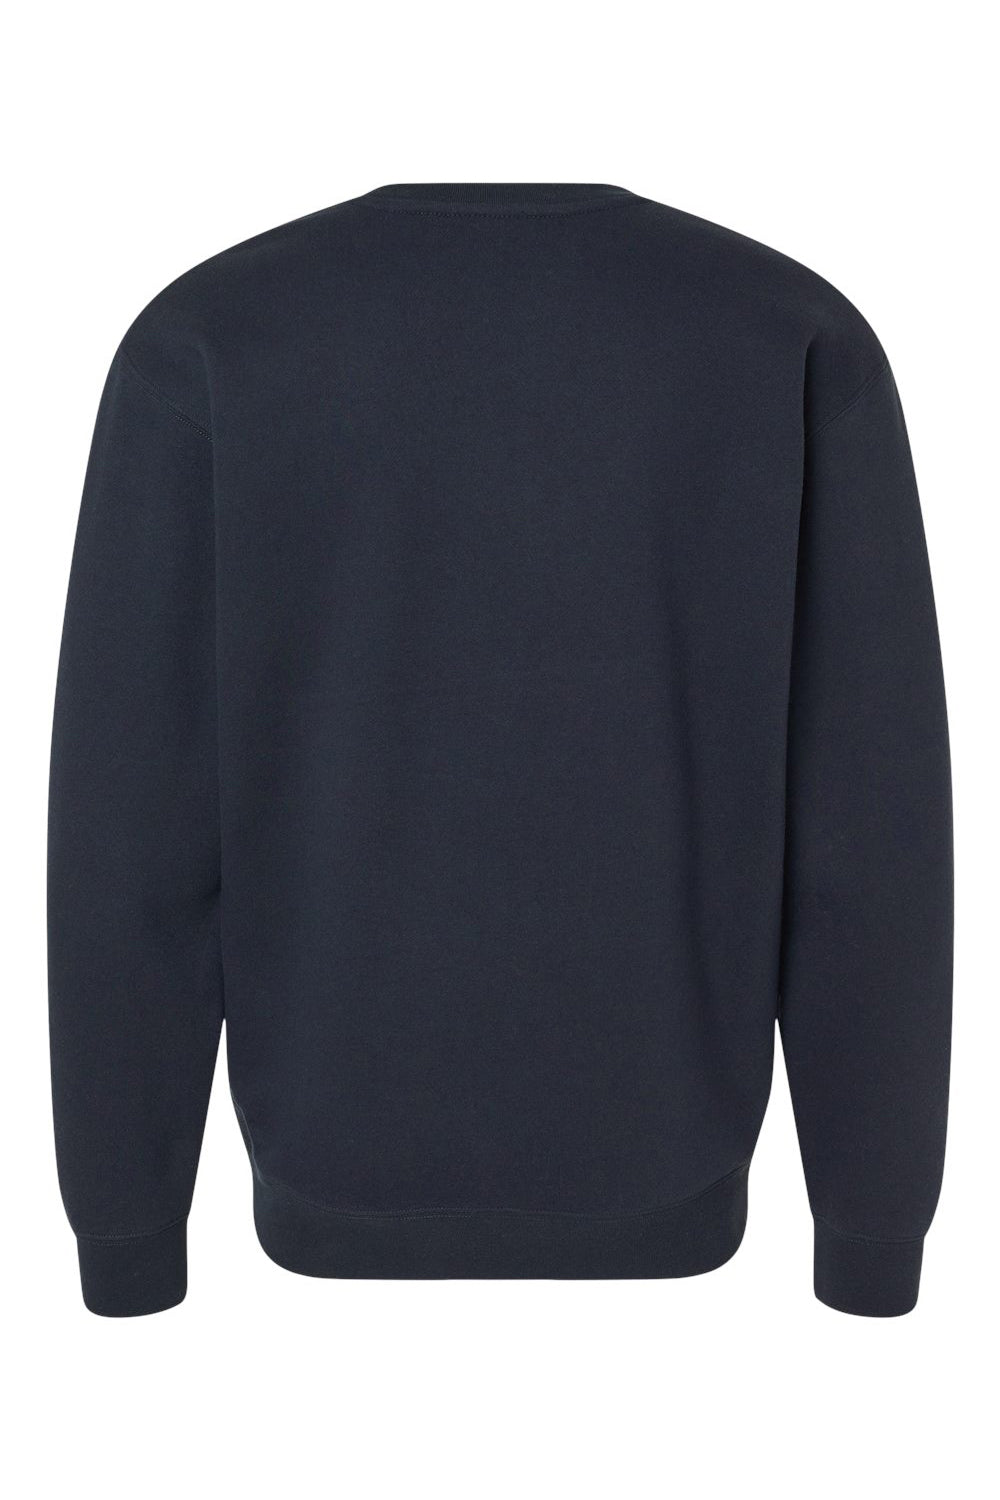 Independent Trading Co. IND3000 Mens Crewneck Sweatshirt Navy Blue Flat Back